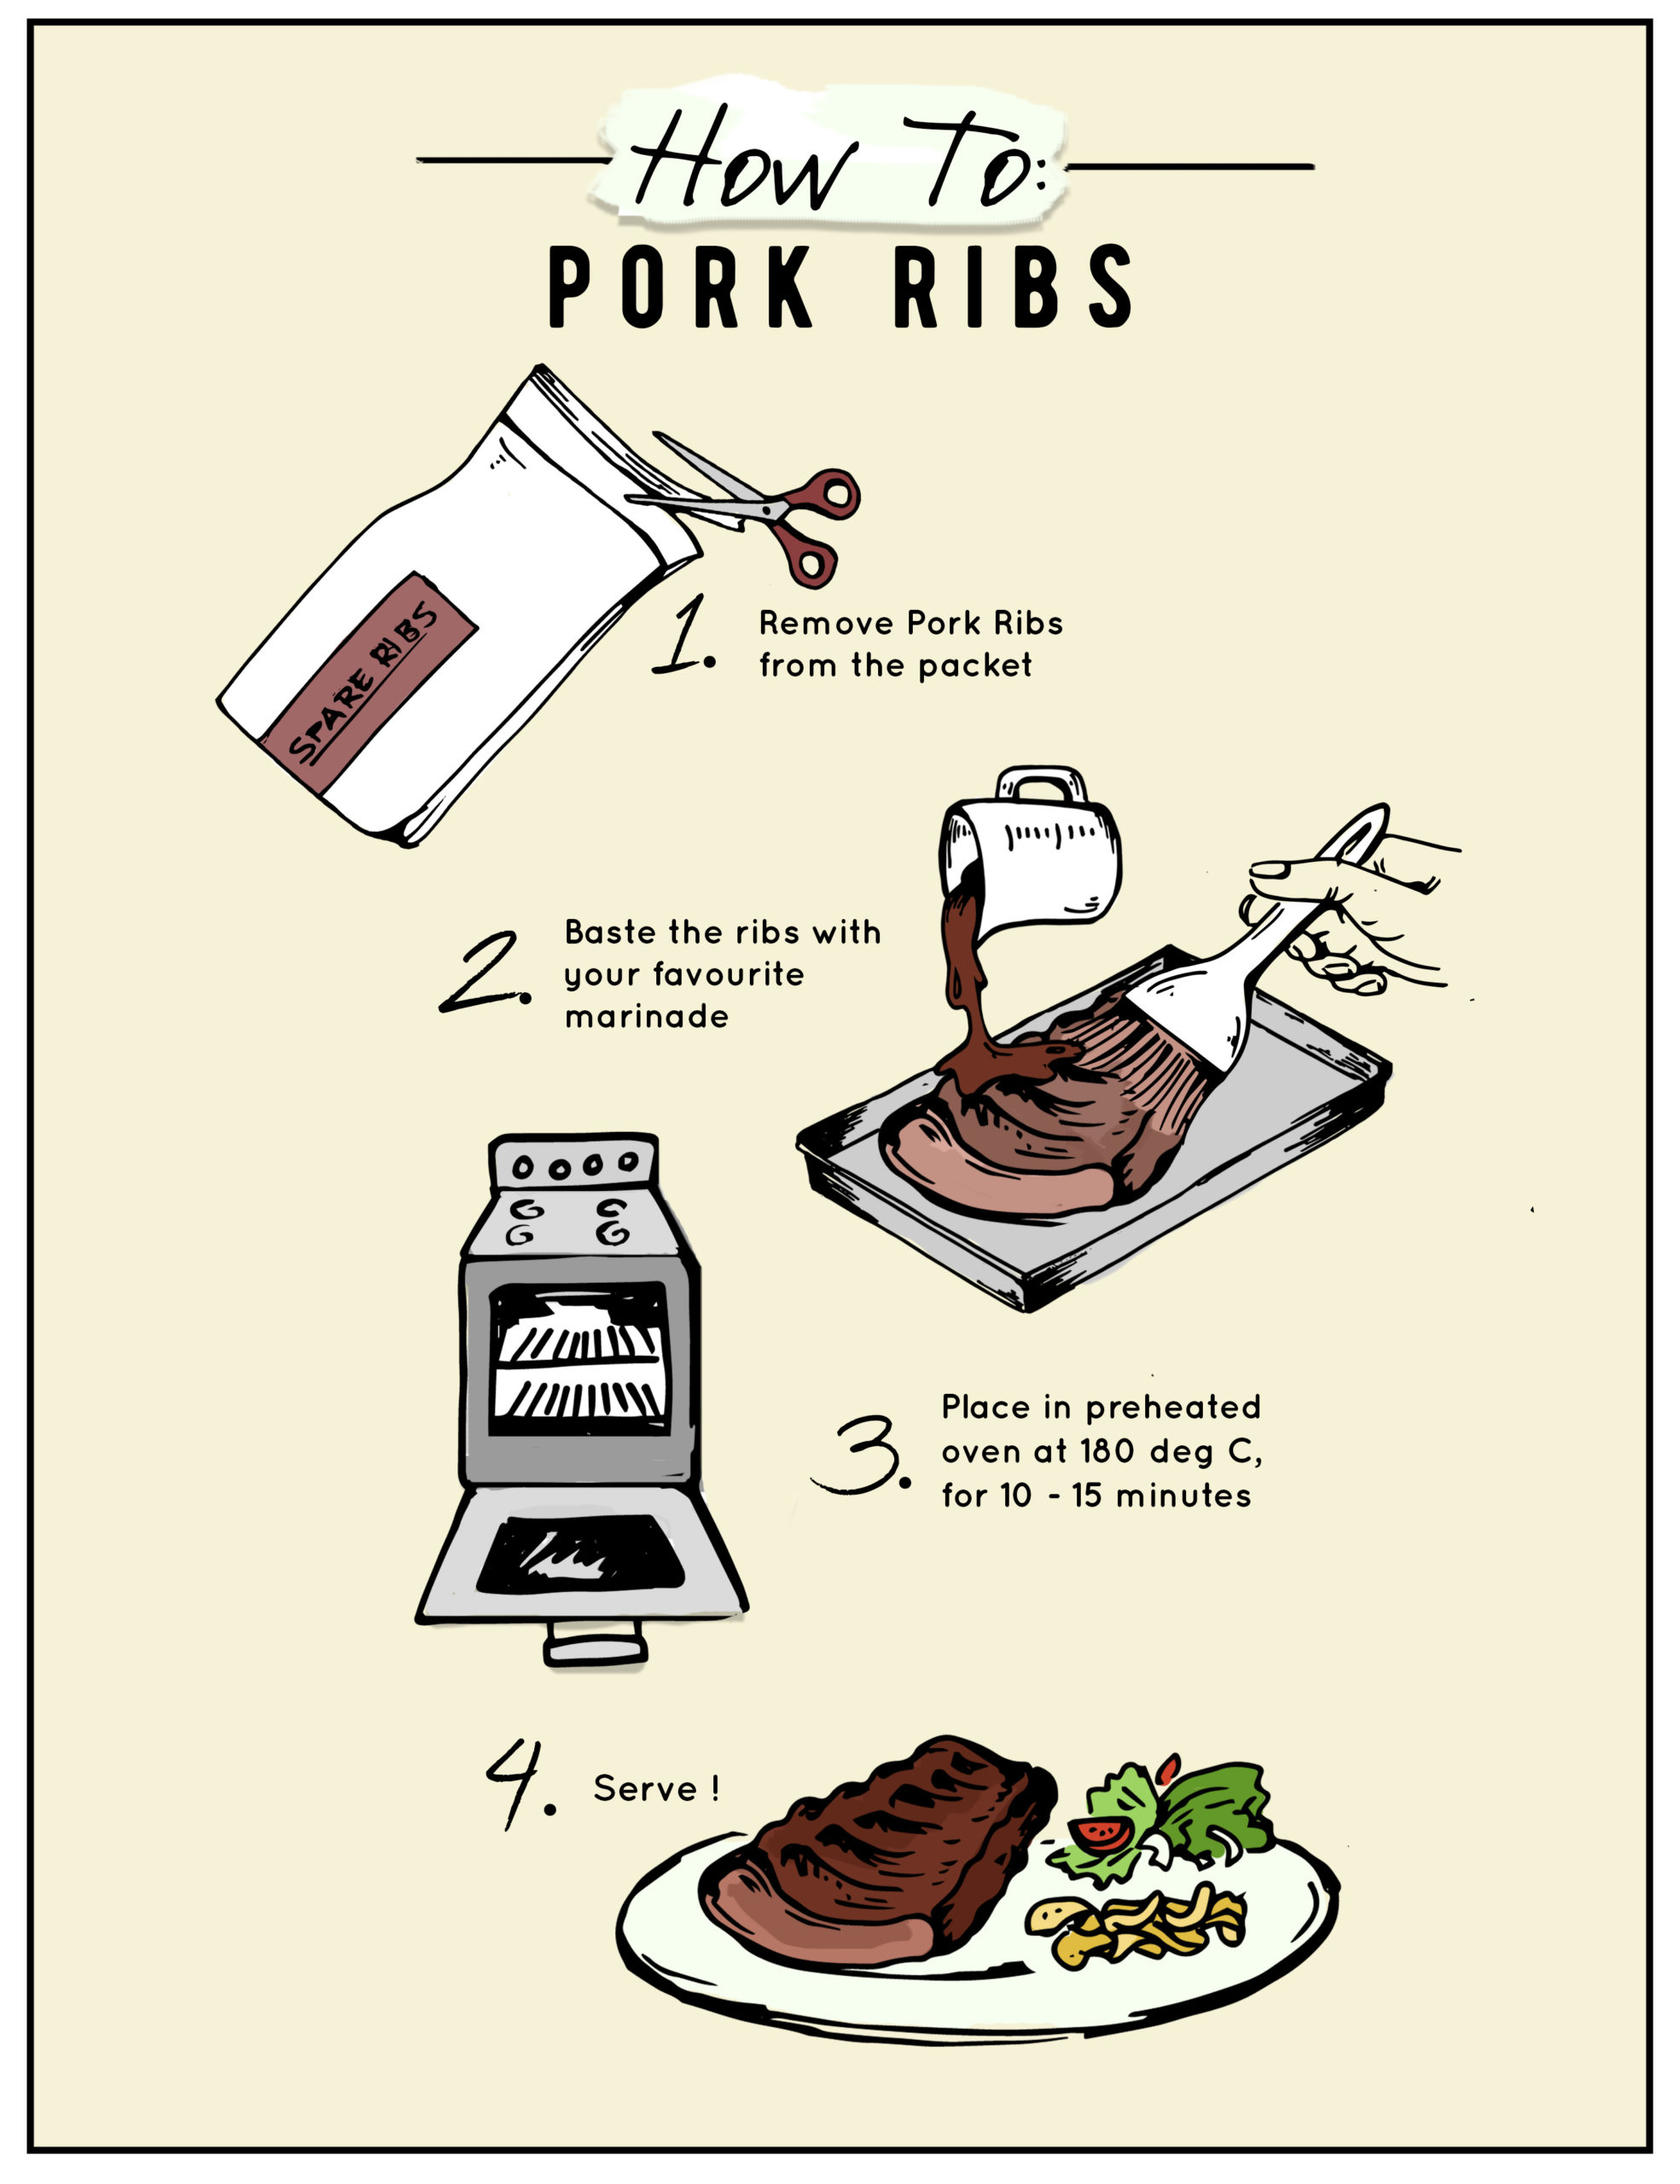 Pork Ribs How To